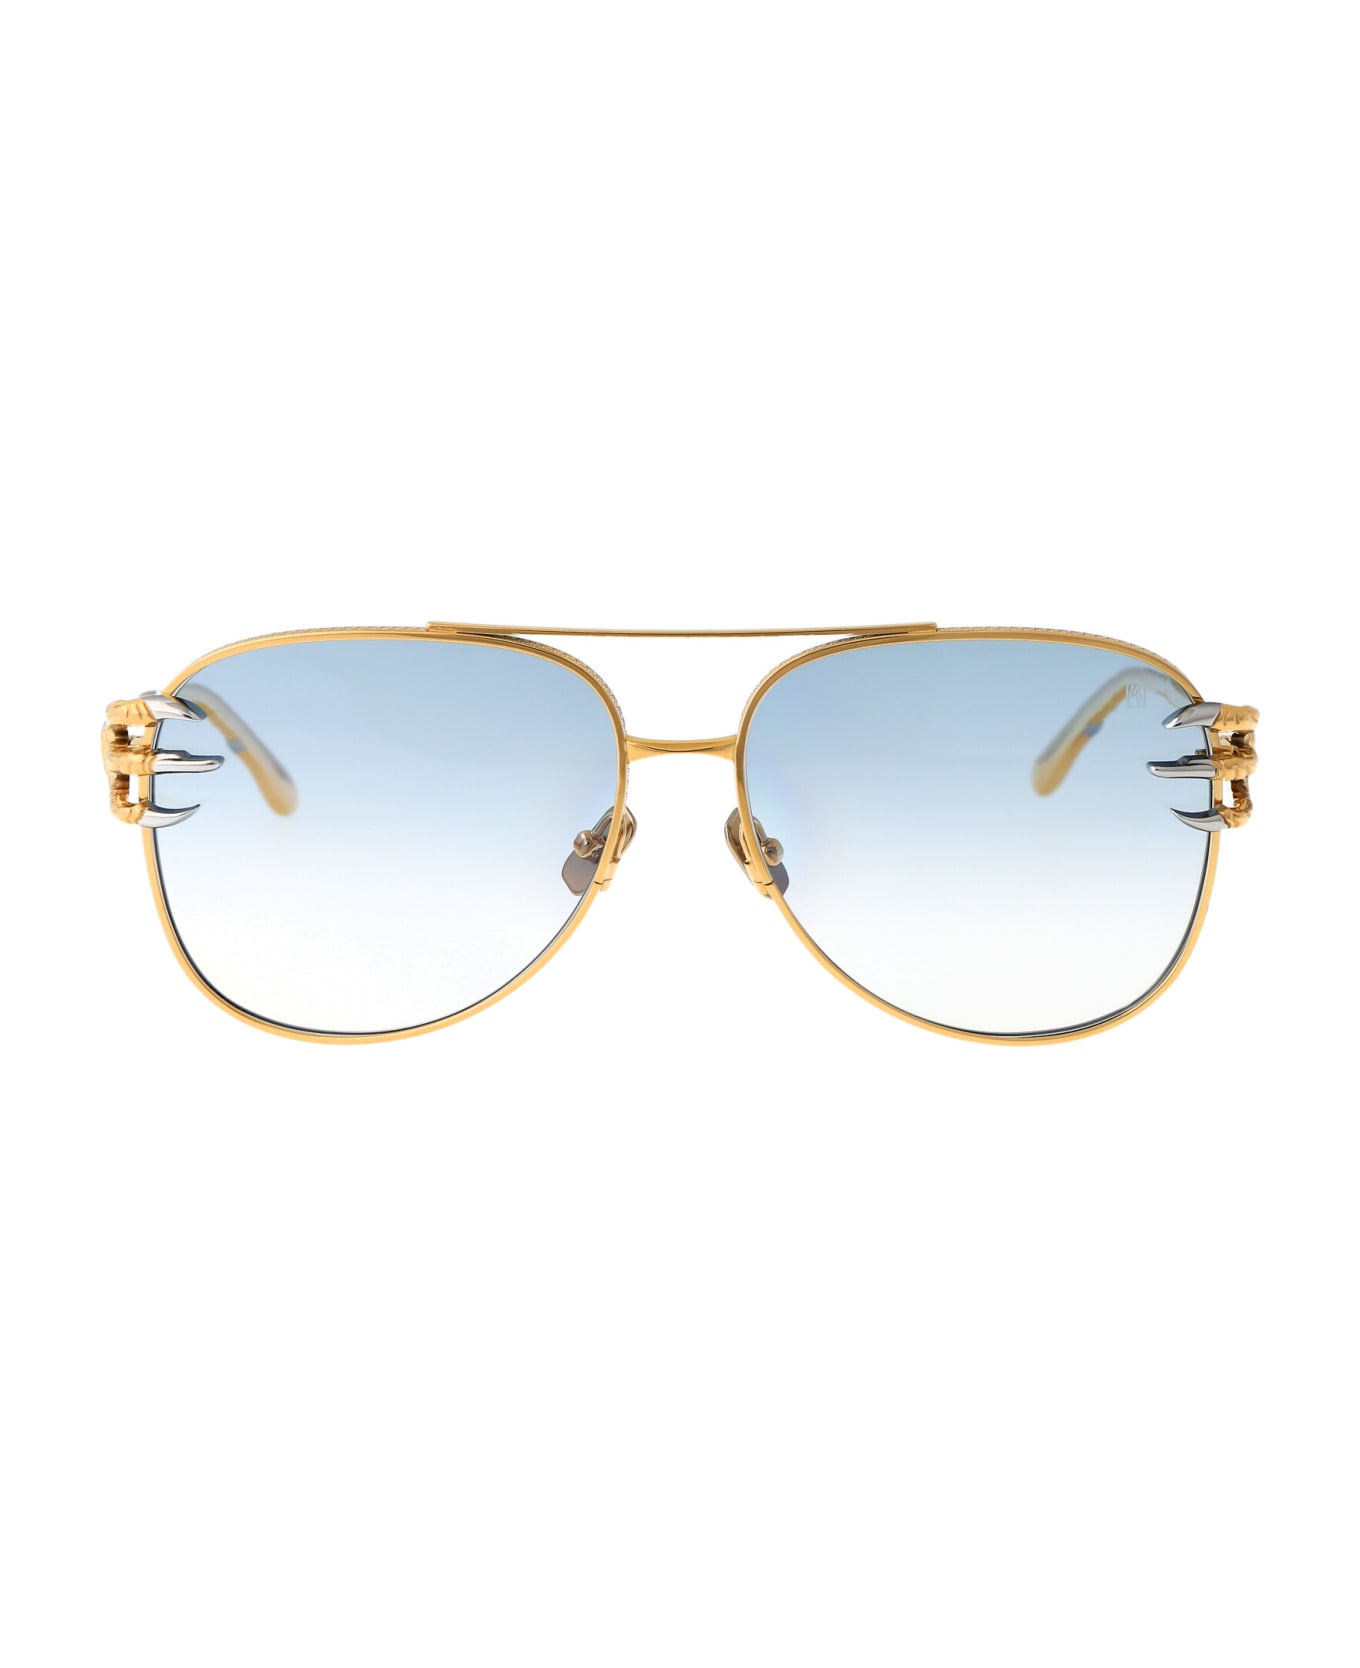 Anna-Karin Karlsson Claw Voyage Sunglasses - Gold Blue lens